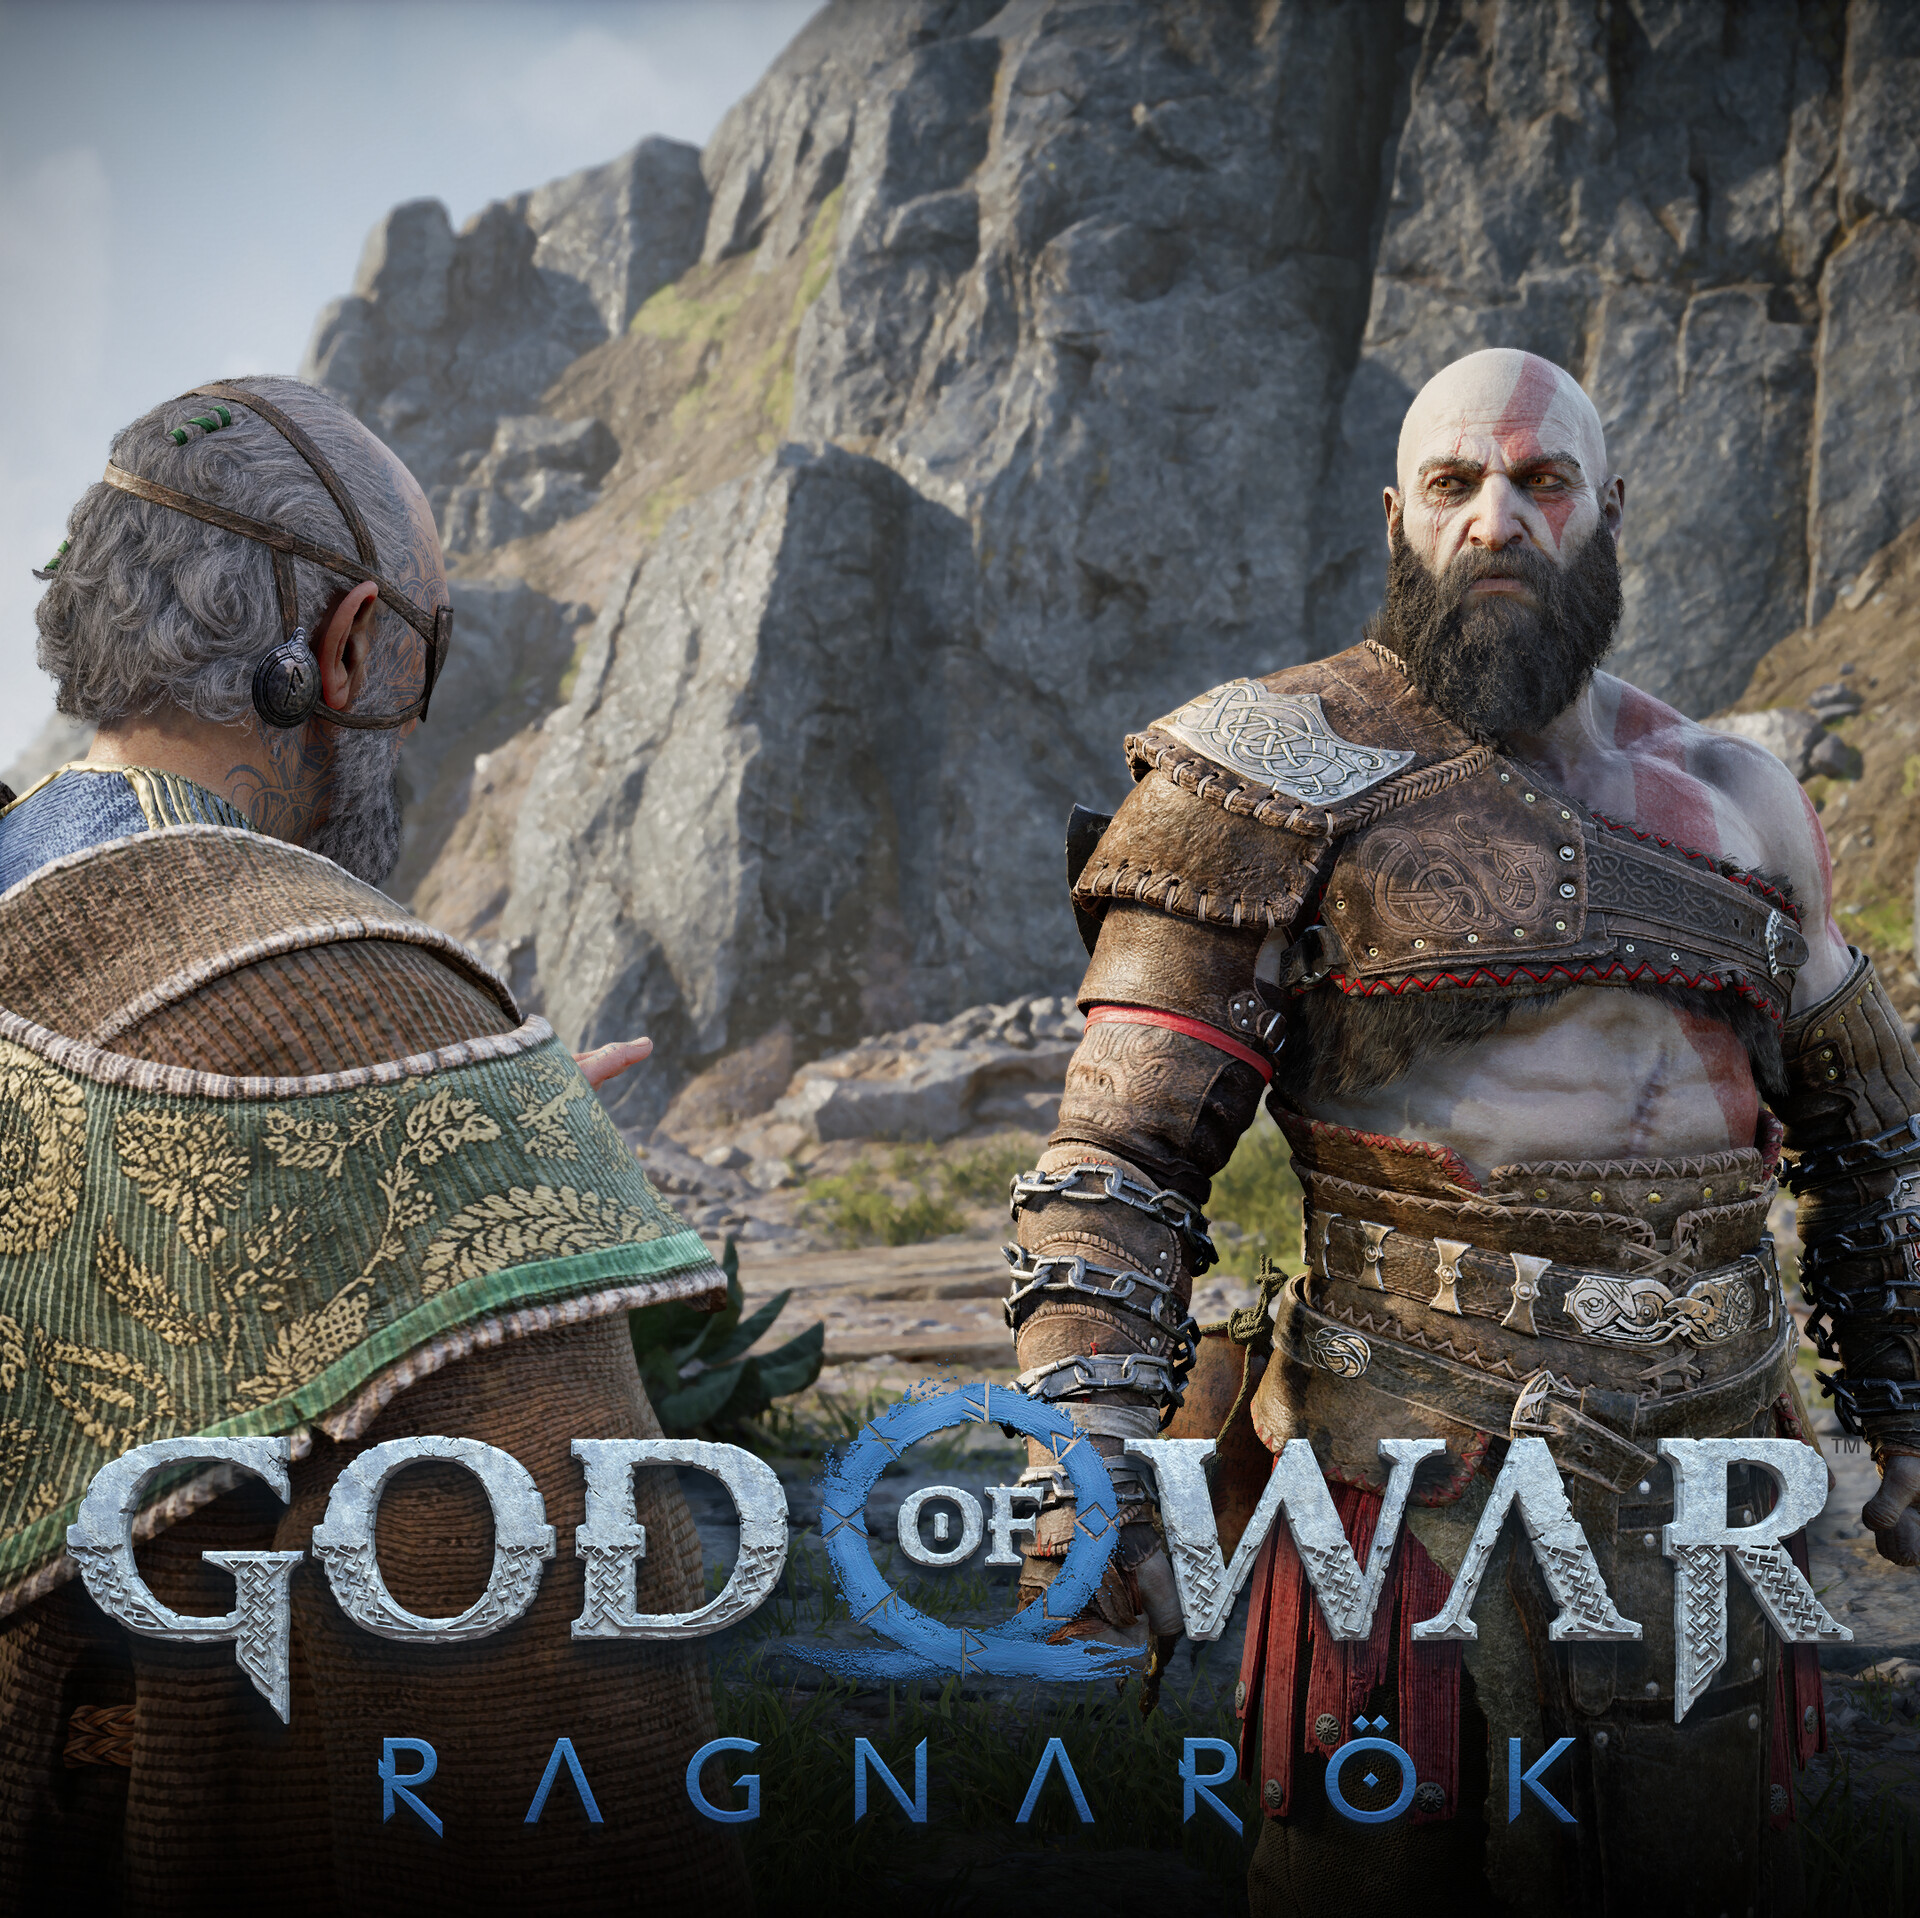 Raf Grassetti - Odin Exploration (God of War Ragnarok)